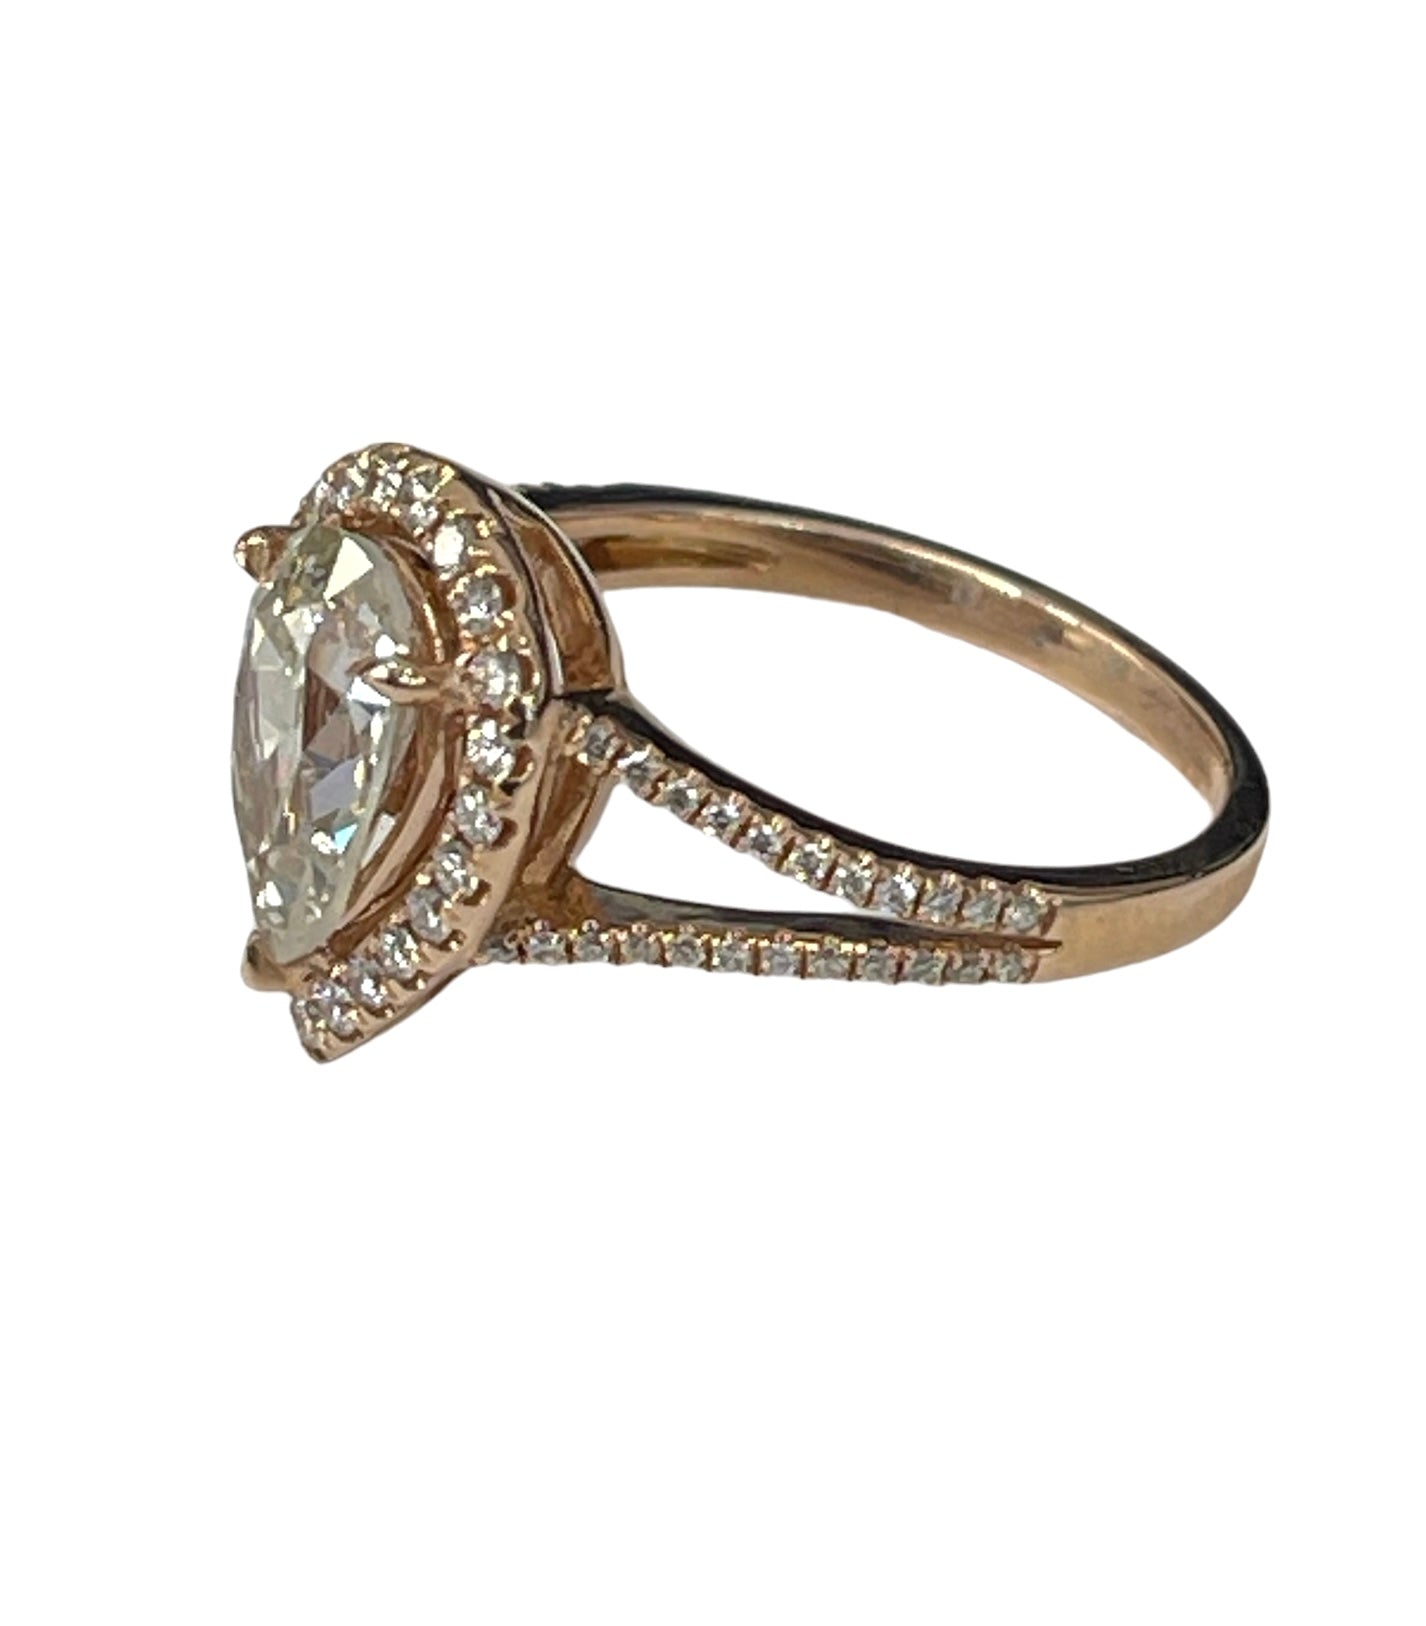 Pear Brilliant Halo Diamond Engagement Ring Rose Gold 14kt